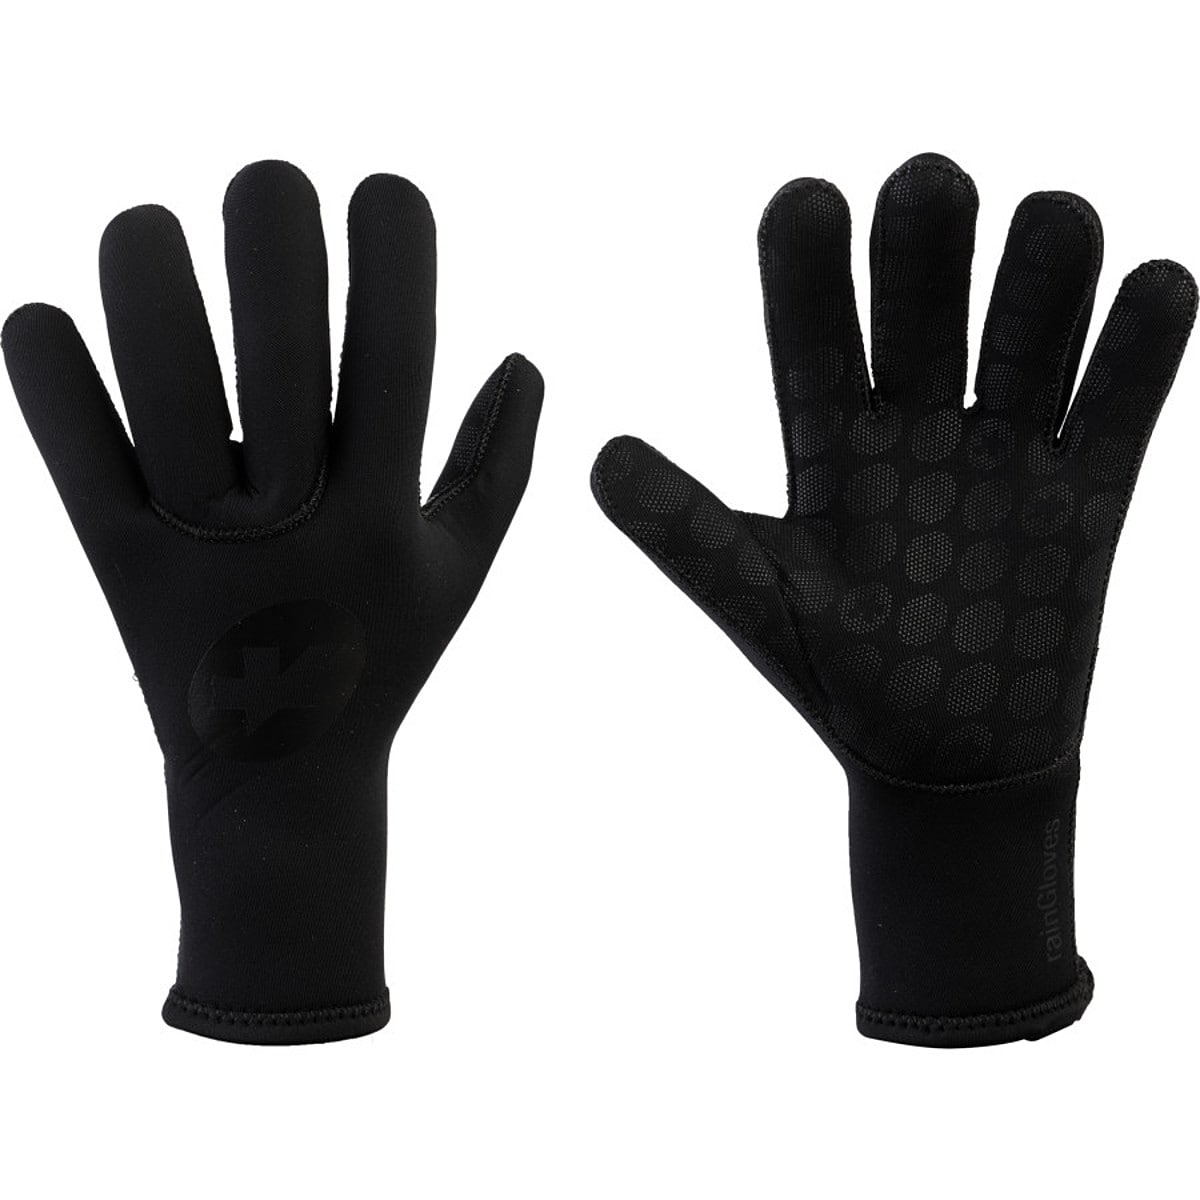 Assos rainGlovess7 Gloves Mens